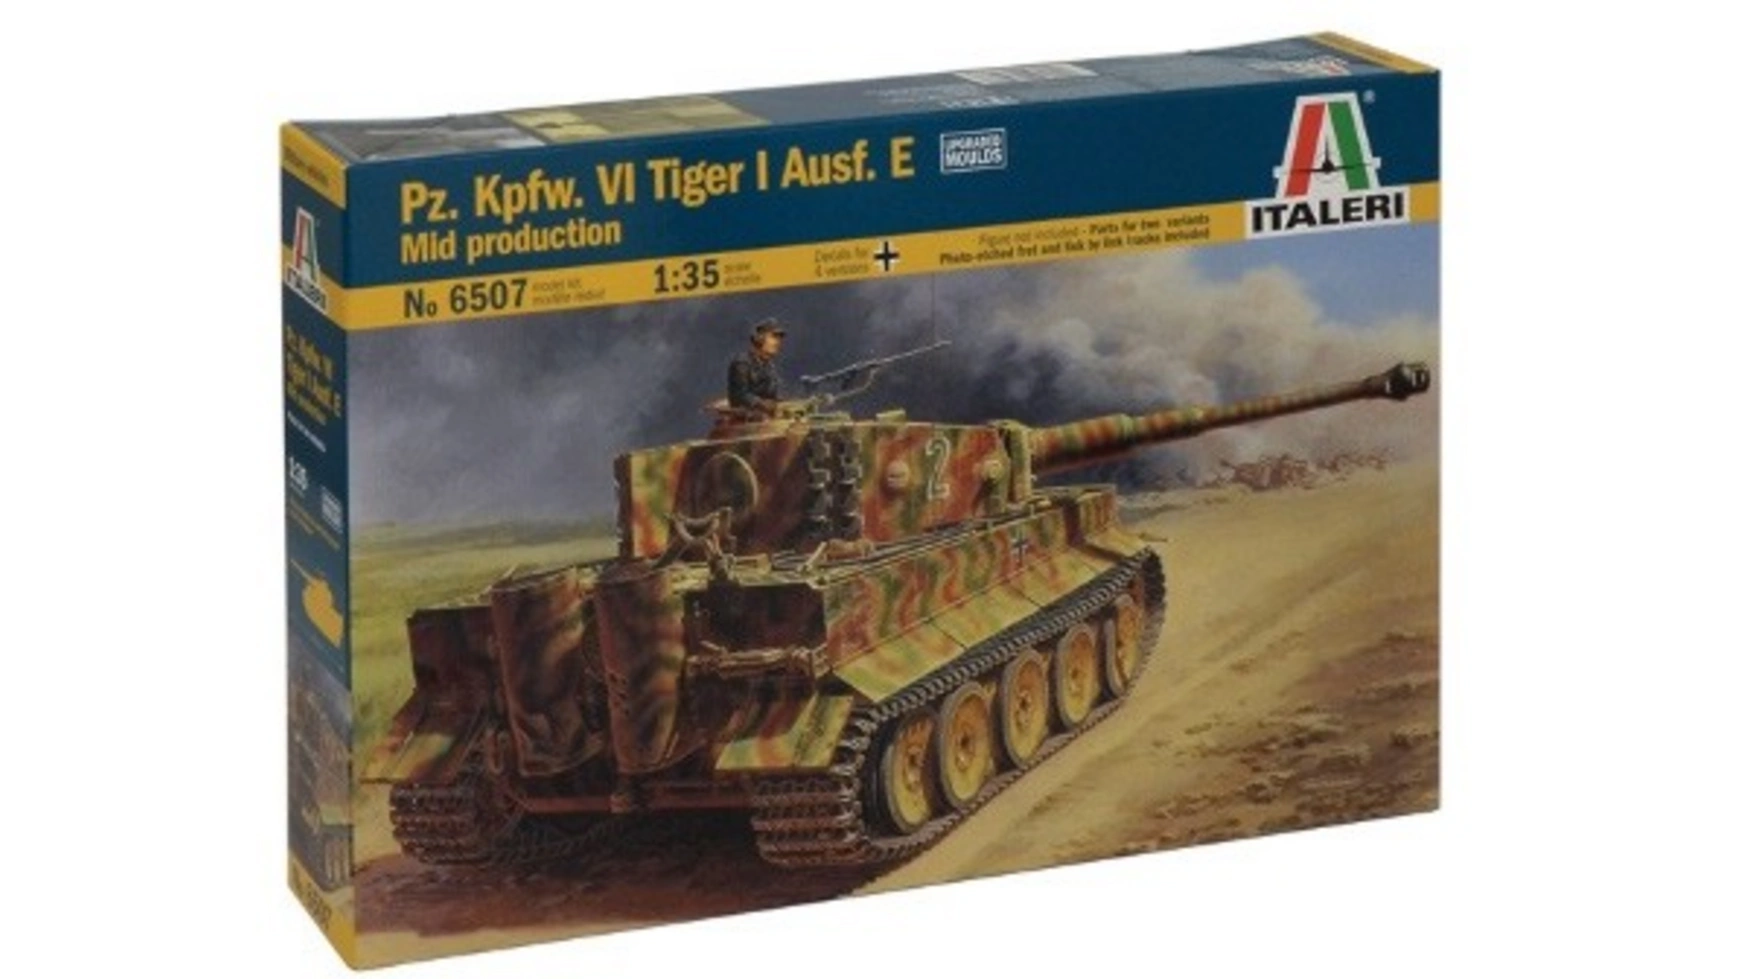 Italeri PzKpfwVI Tiger I AusfE среднего производства